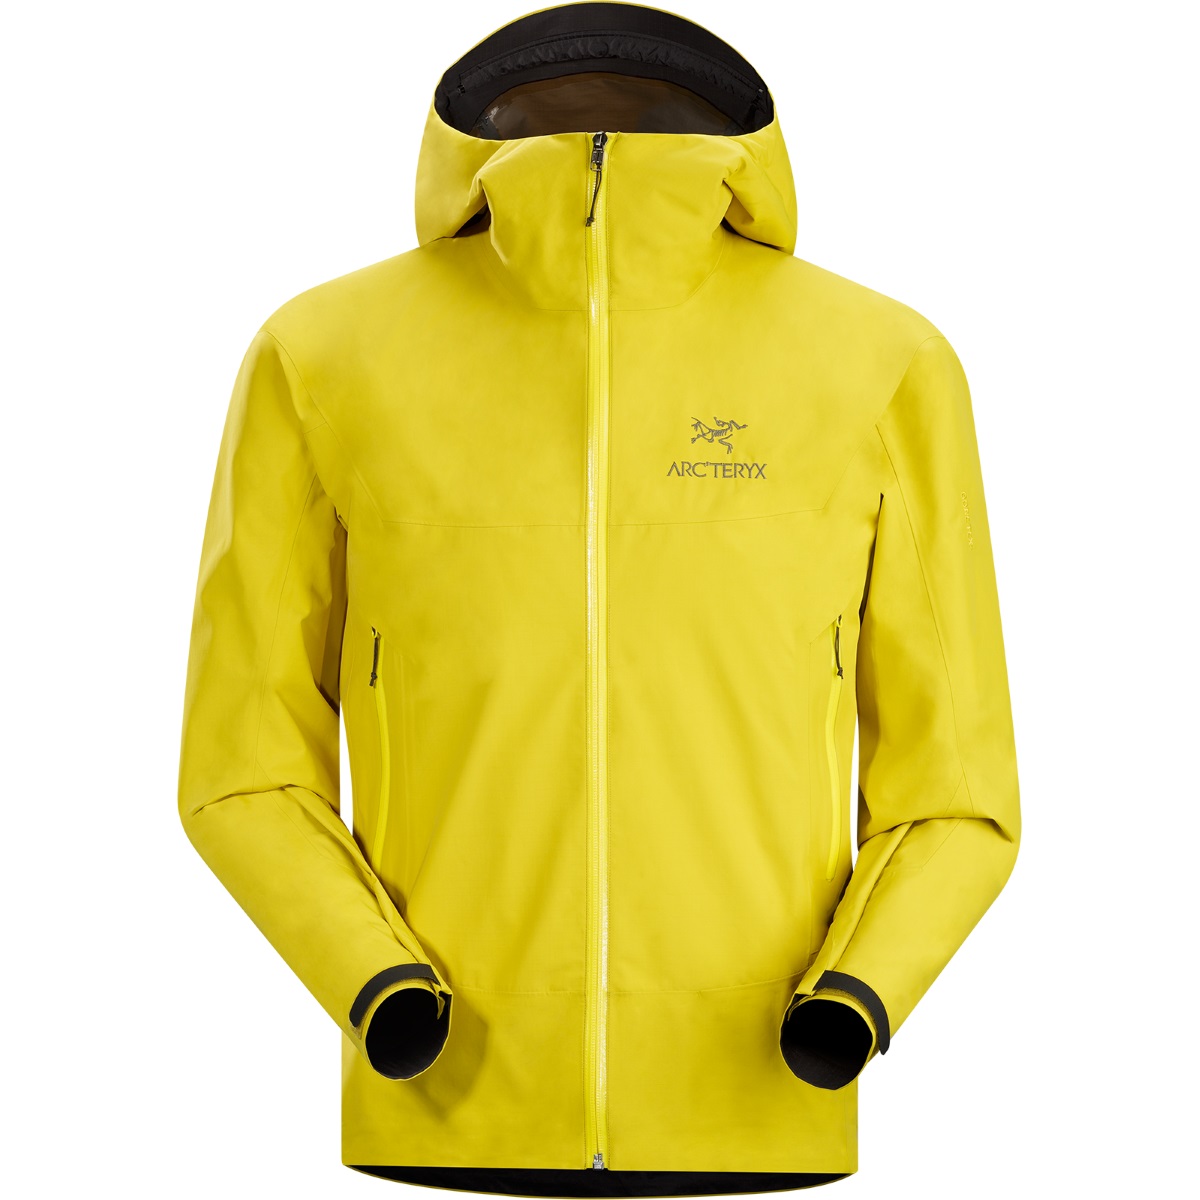 Arc'teryx Beta SL Jacket, Men's, discontinued Fall 2014 colors (free ...